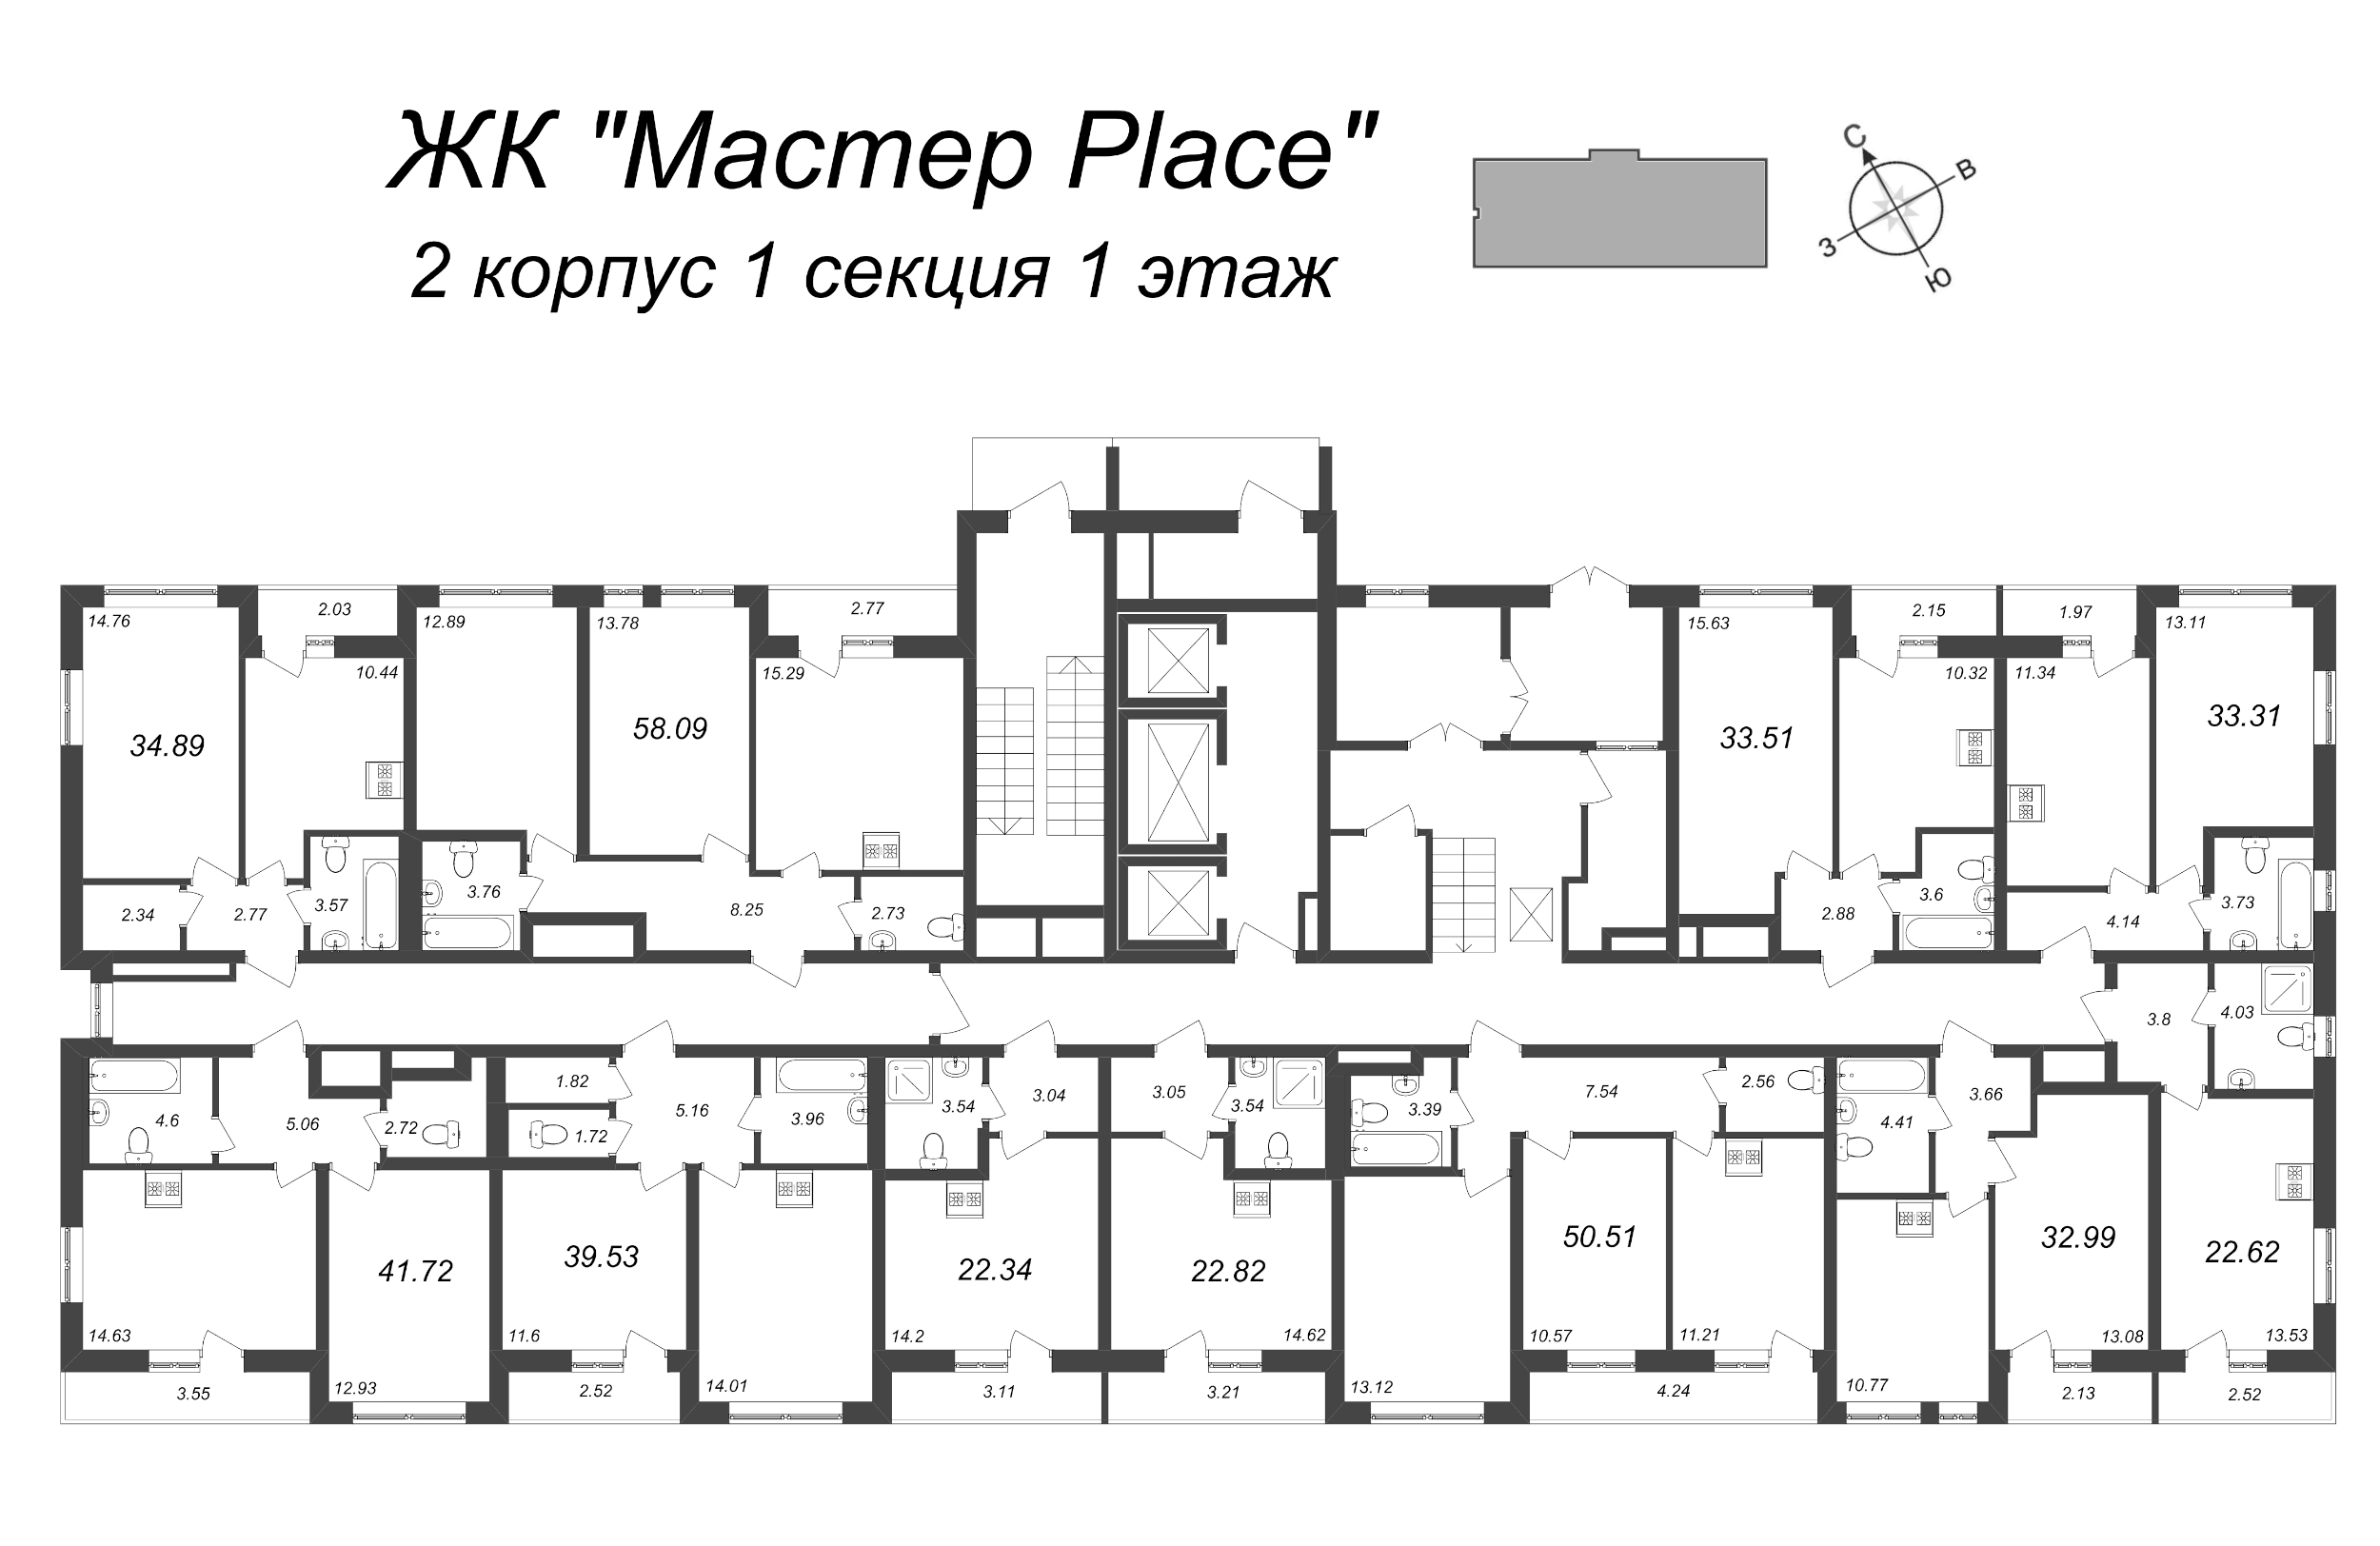 3-комнатная (Евро) квартира, 58.09 м² - планировка этажа